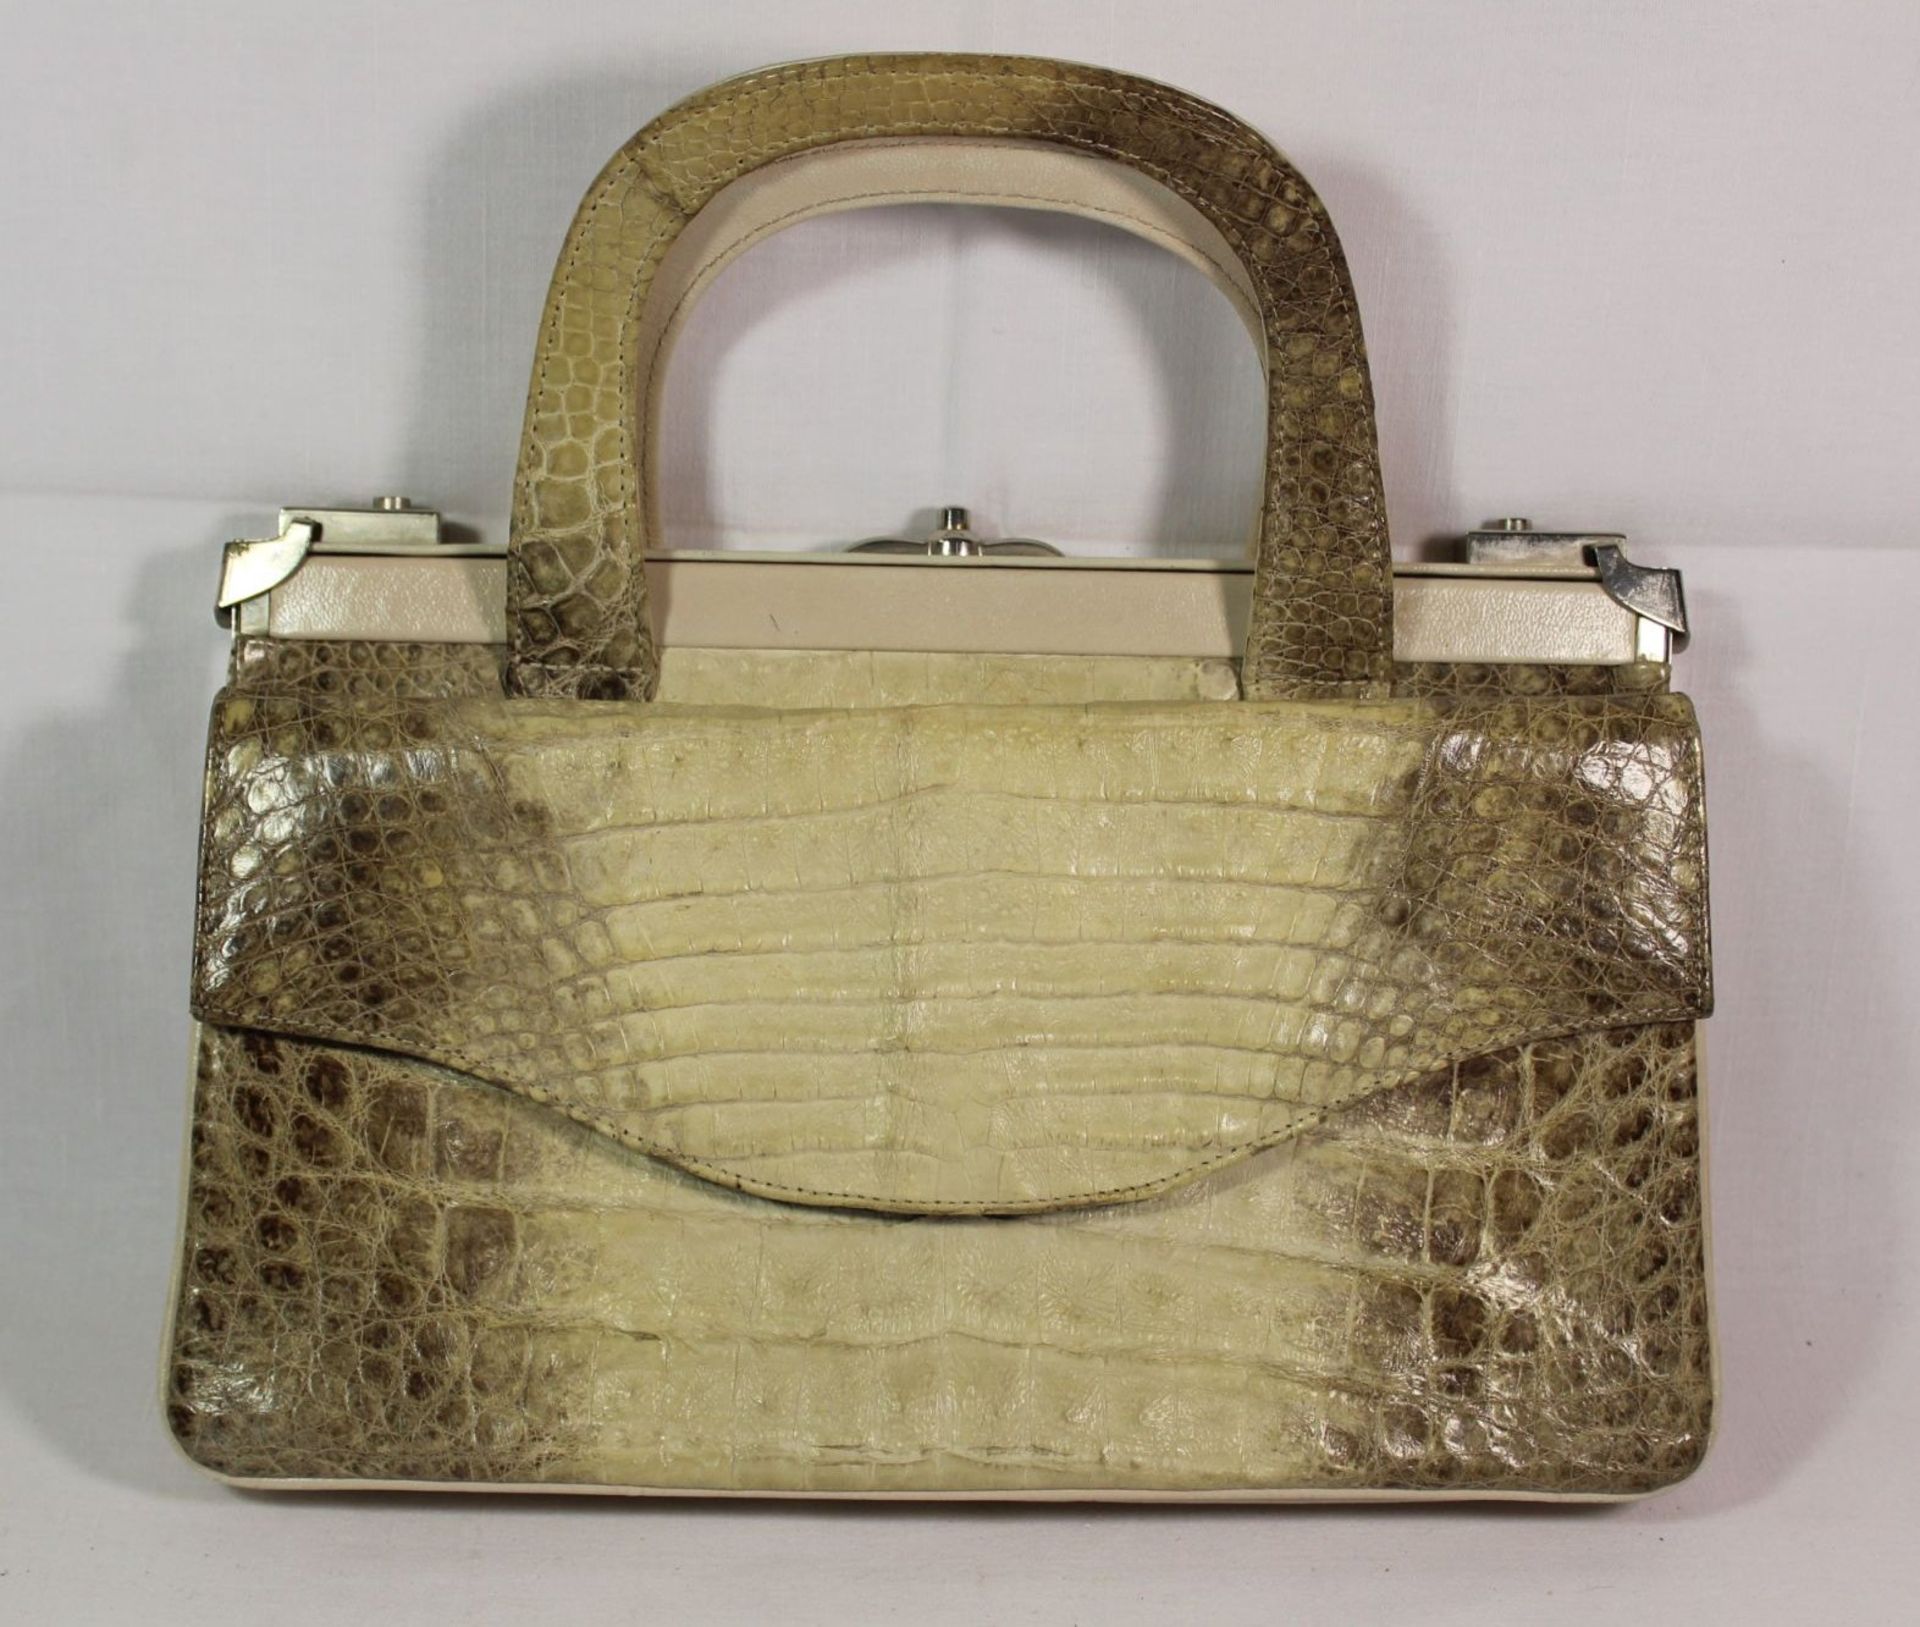 Damenhandtasche, Krokoleder, älterm leichte Tragespuren, 20 x 32cm.